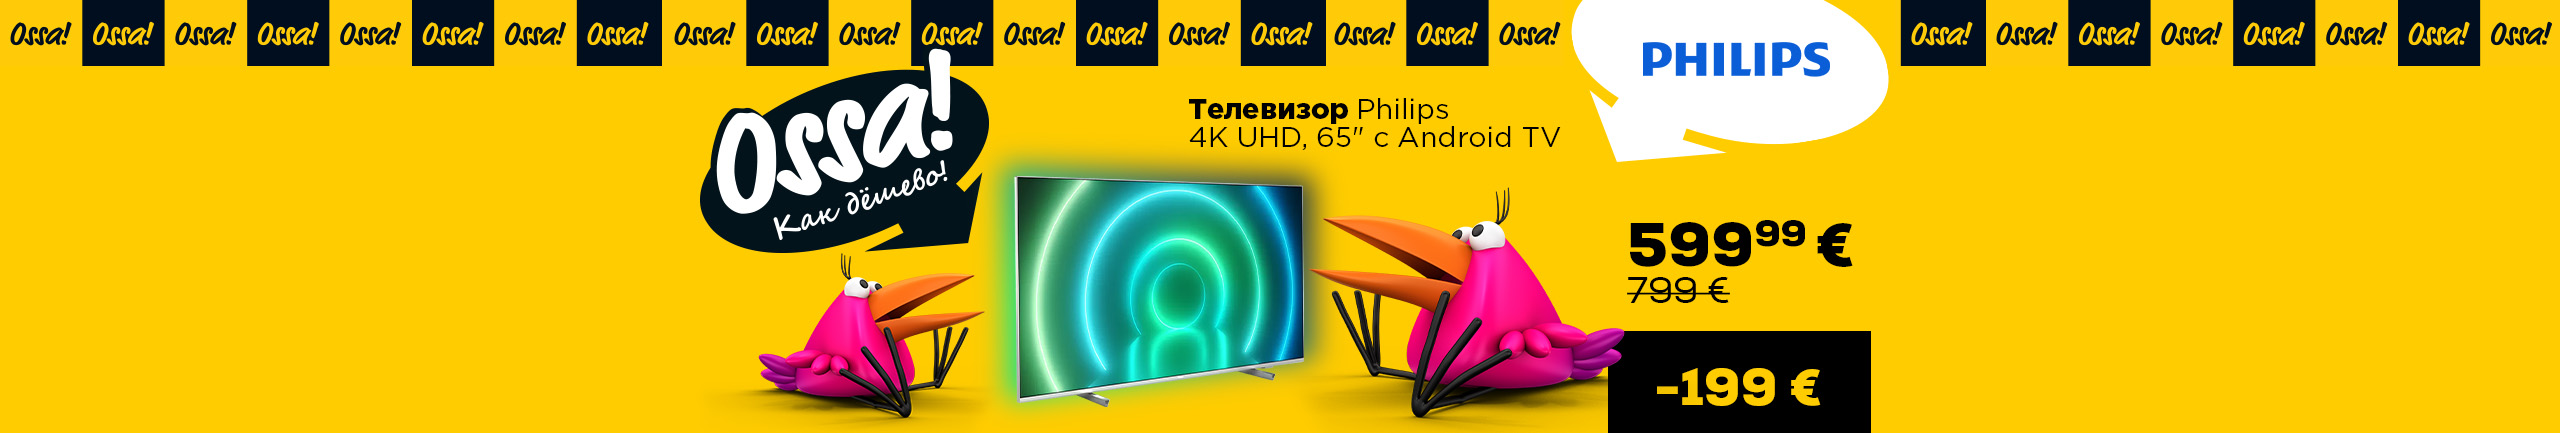 Ухх! Kaк низкие цены. Philips телевизор 4K UHD, 65" с Android TV